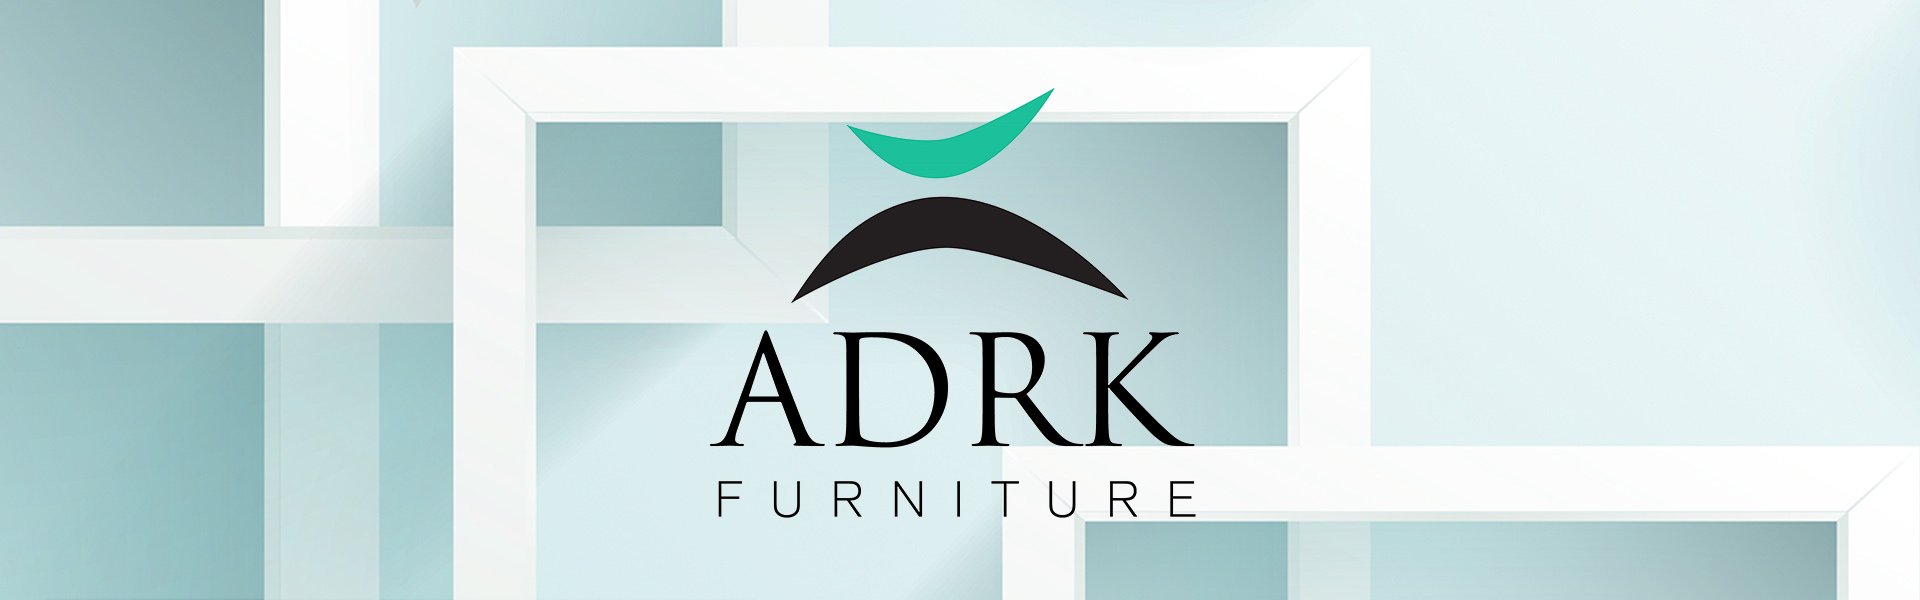 Skapis Baltimore ADRK Furniture